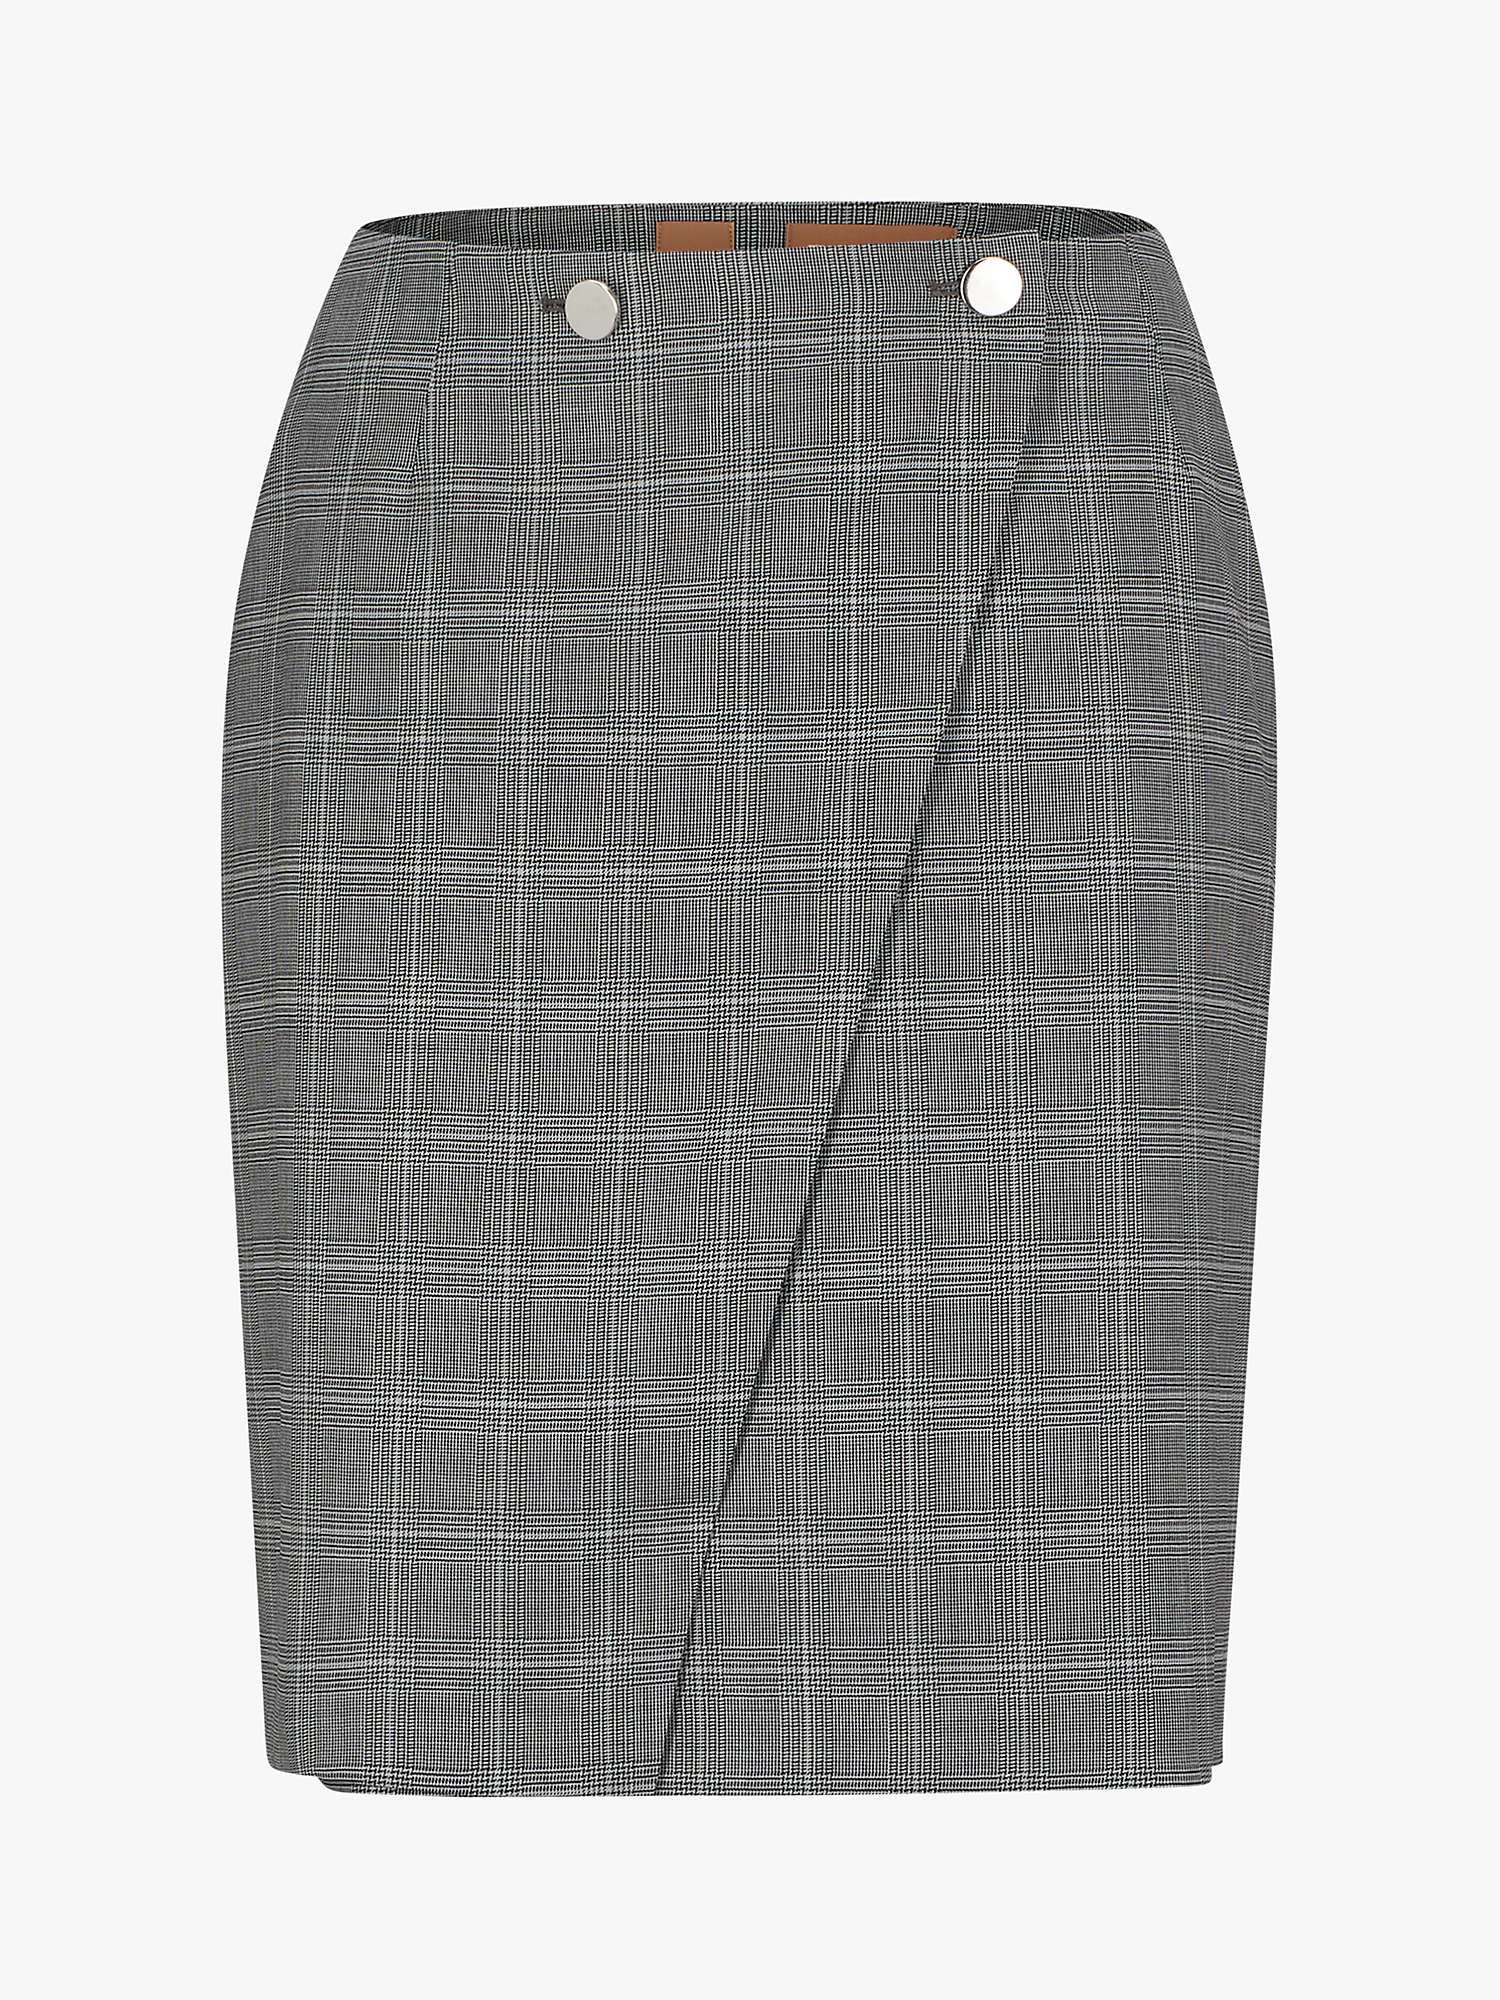 Buy HUGO BOSS Vanata Wool Check Skirt, Grey Online at johnlewis.com